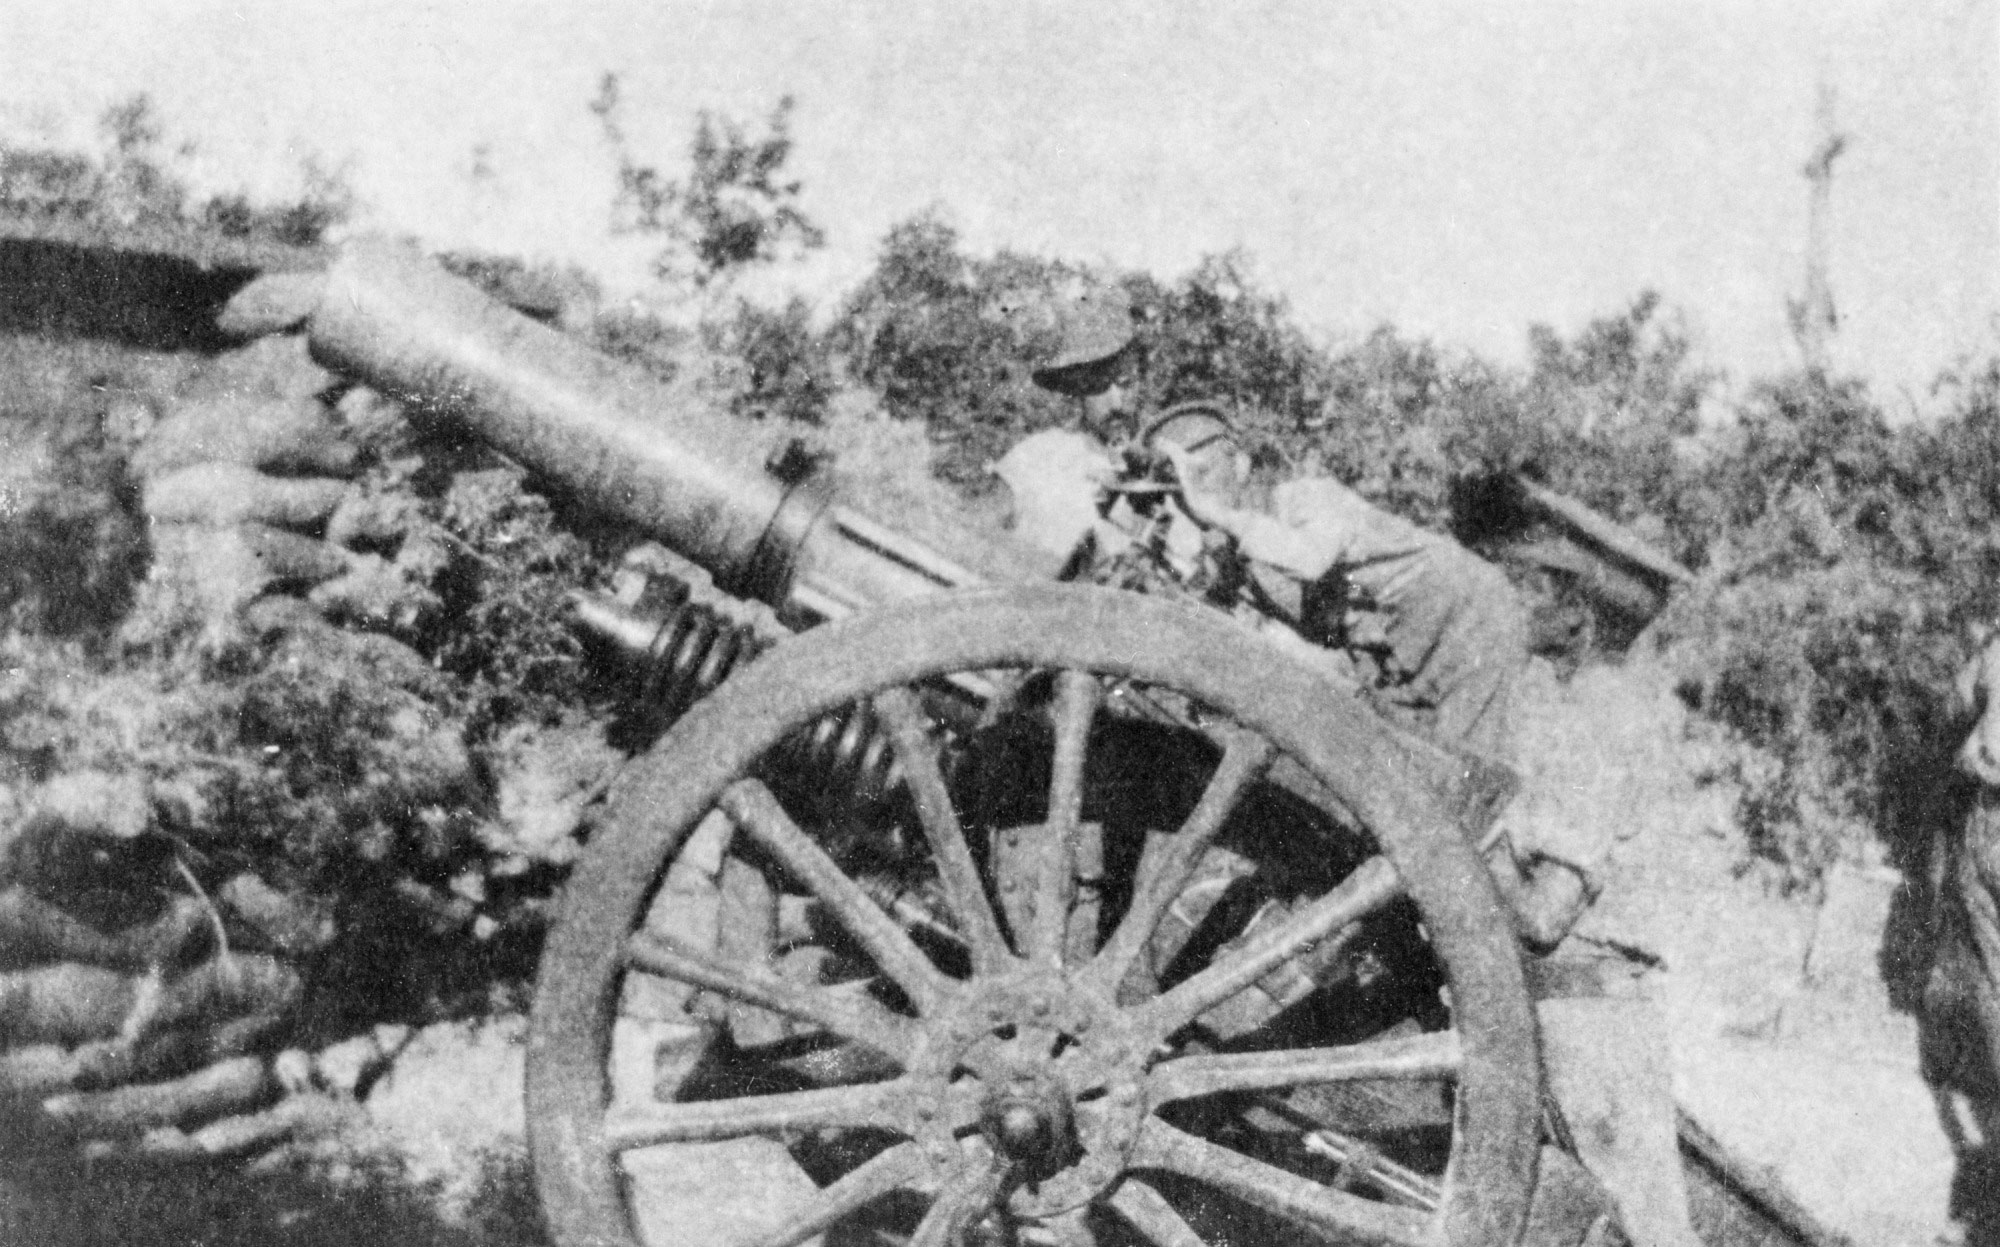 Australian soldiers prepare artillery, Gallipoli, August 1915.